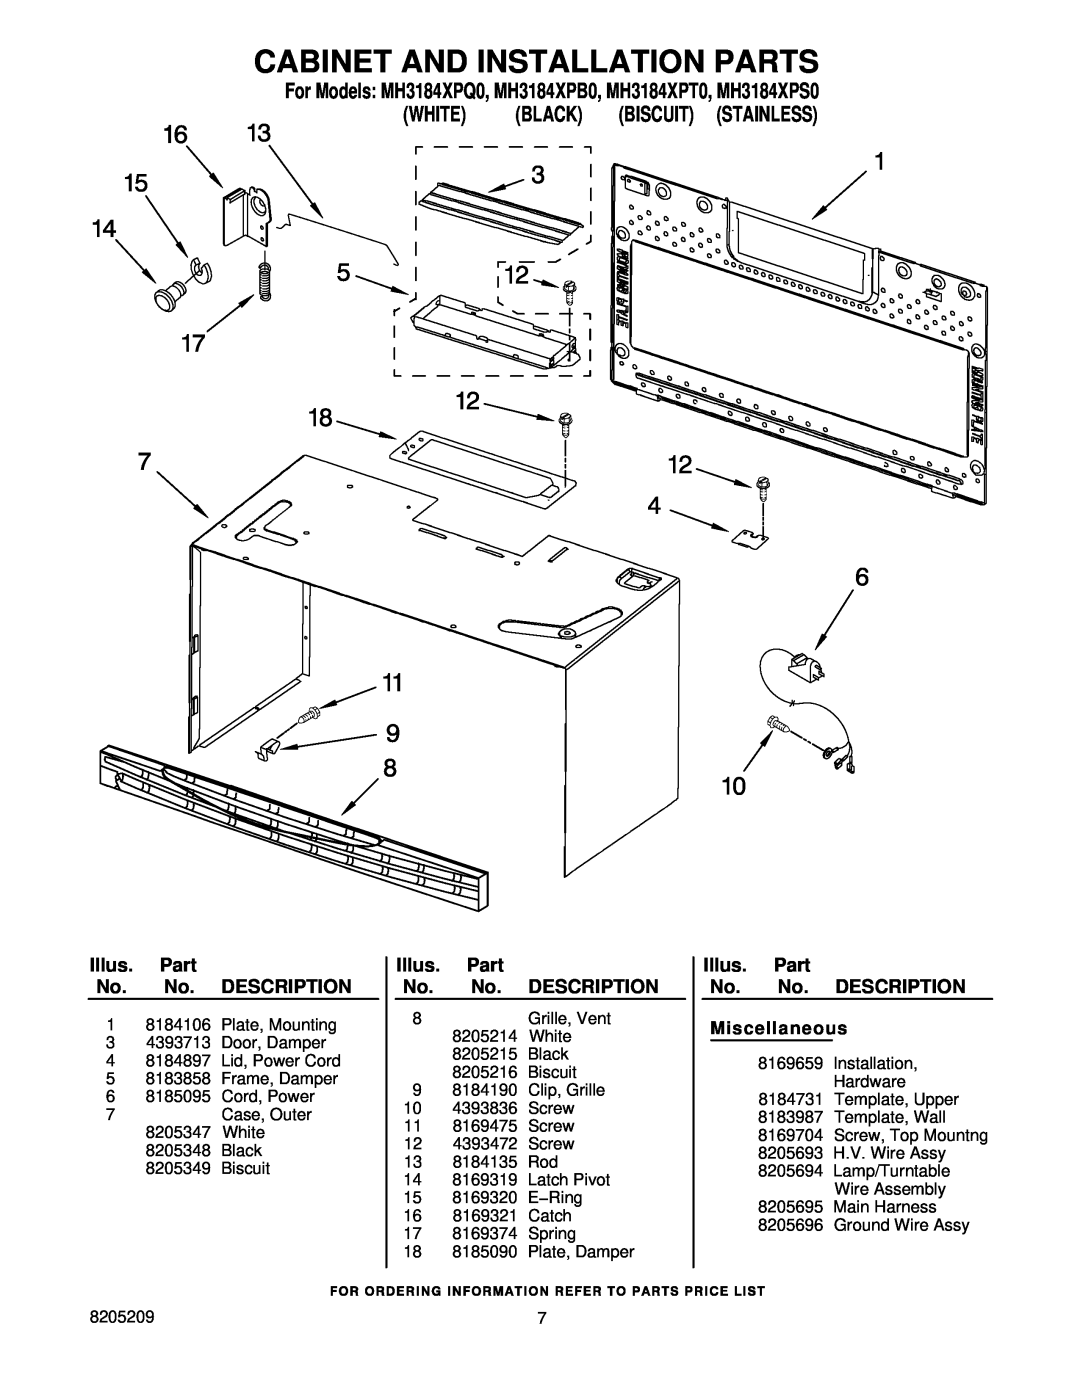 Whirlpool MH3184XPB0 manual Cabinet And Installation Parts, Illus. Part No. No. DESCRIPTION Miscellaneous, White, Black 